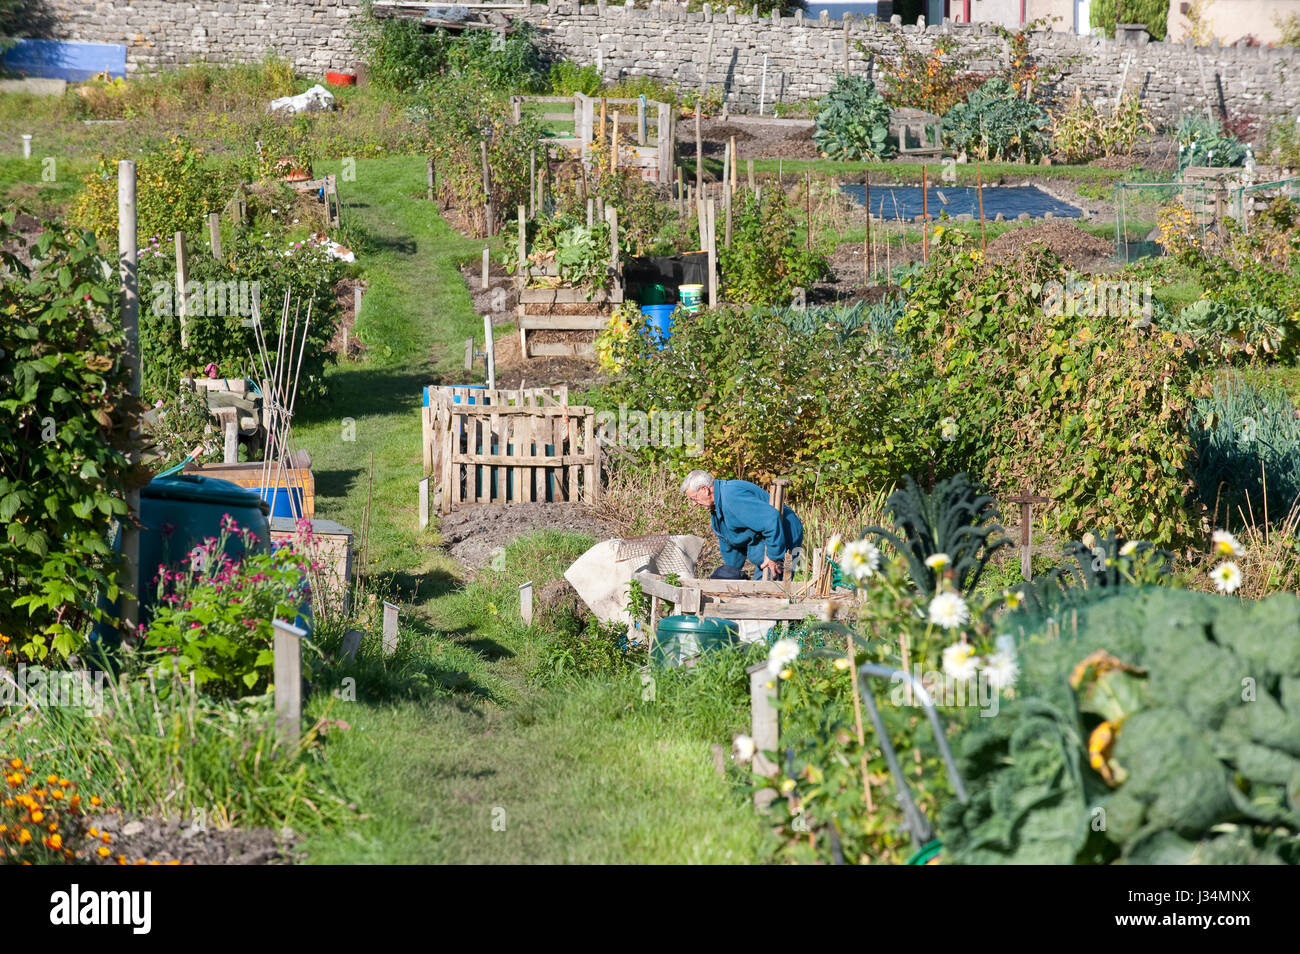 Gardening allotments,Kendal, Cumbria. Stock Photo